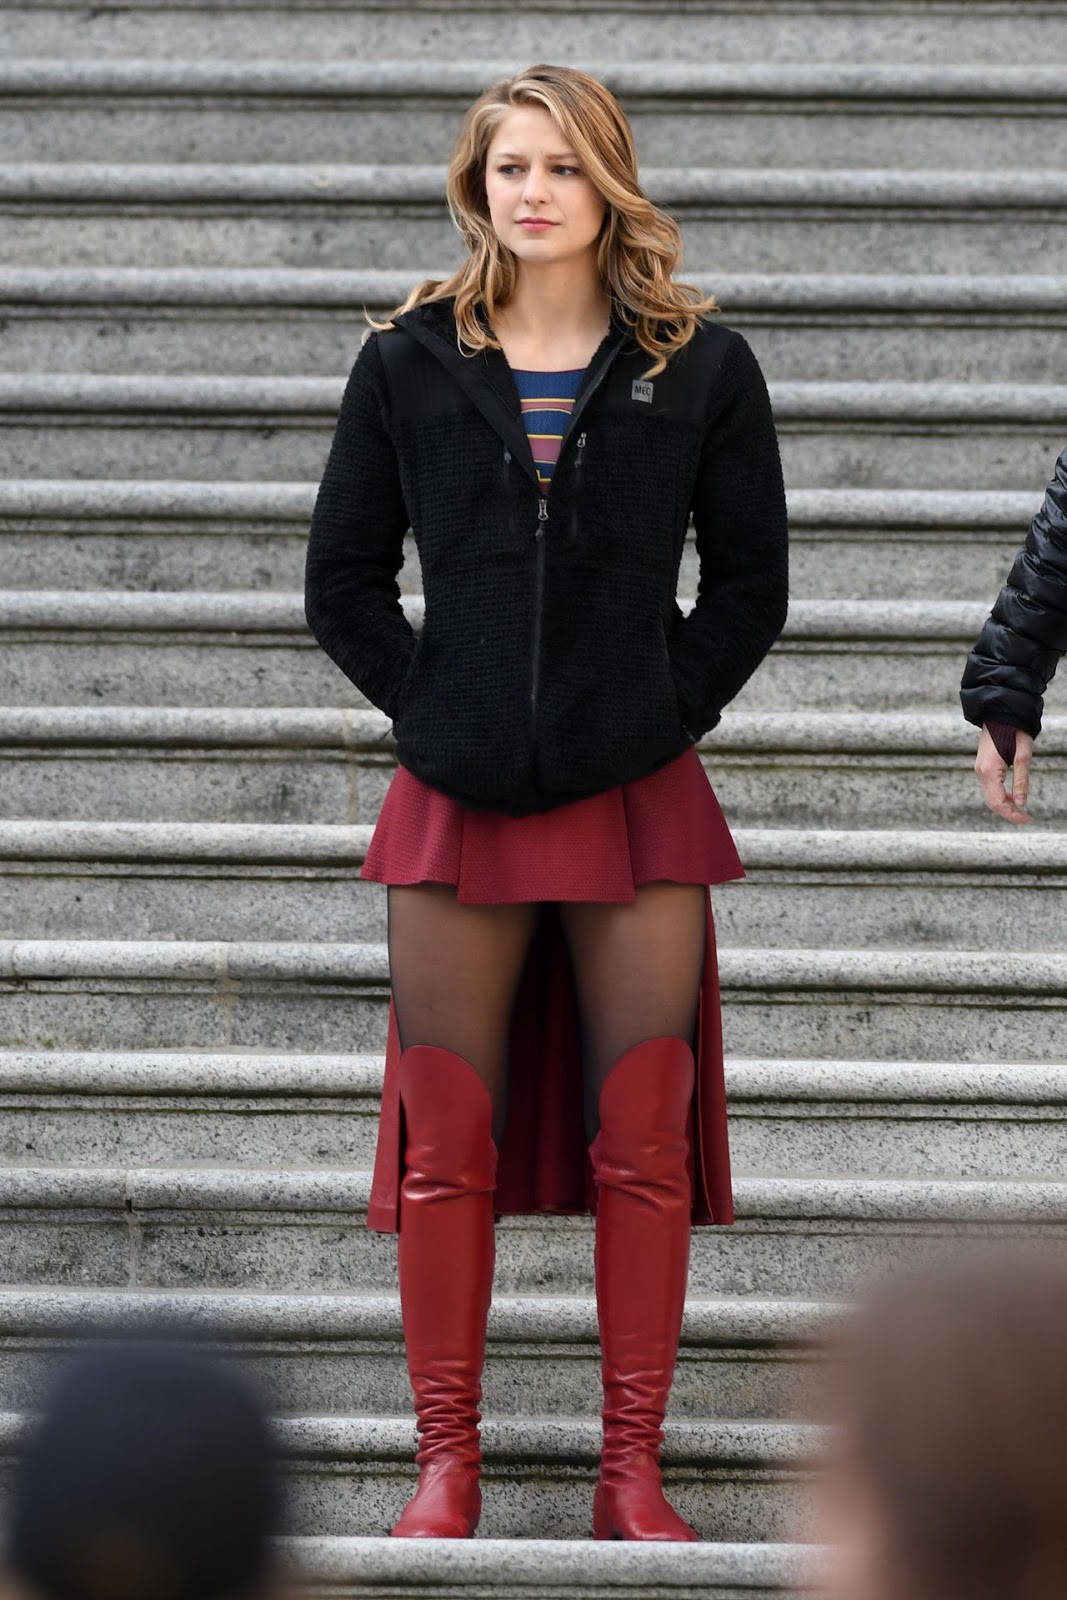 Melissa Benoist Finale Of “supergirl” Filming In